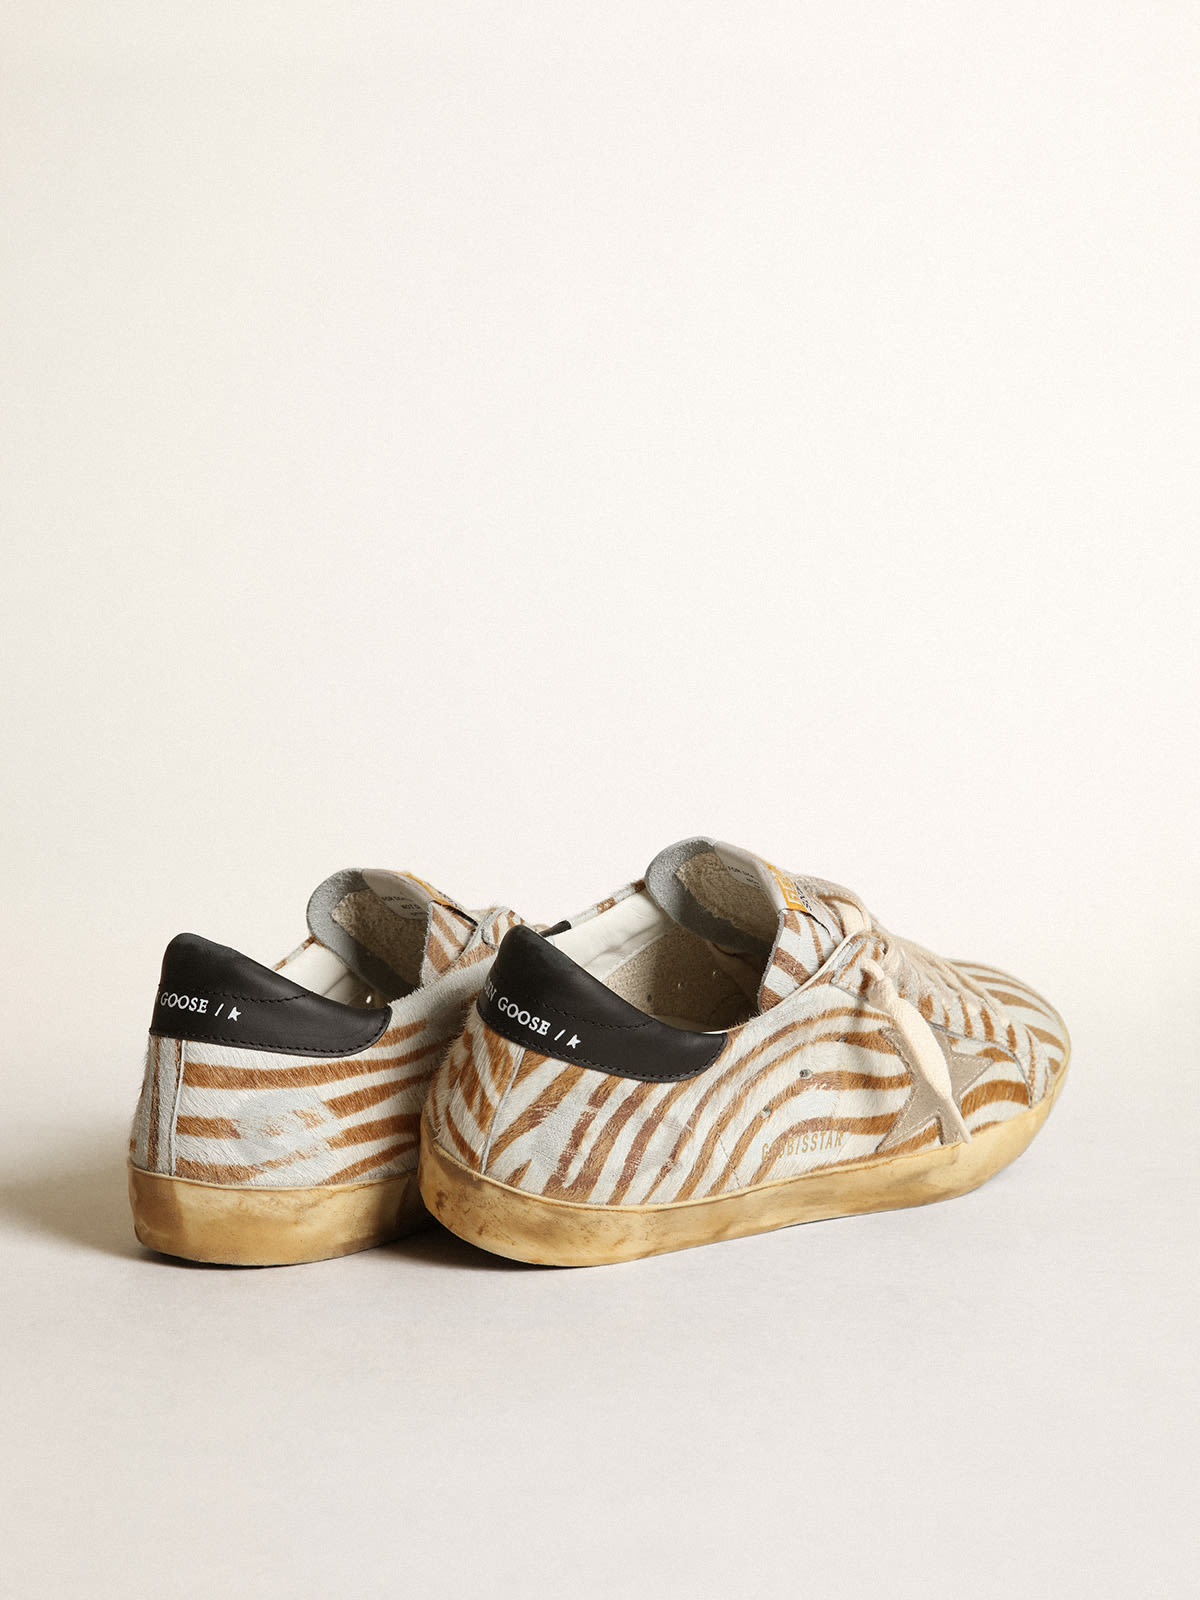 Golden Goose - Men’s Super-Star sneakers in zebra-print pony skin with dove-gray suede star in 